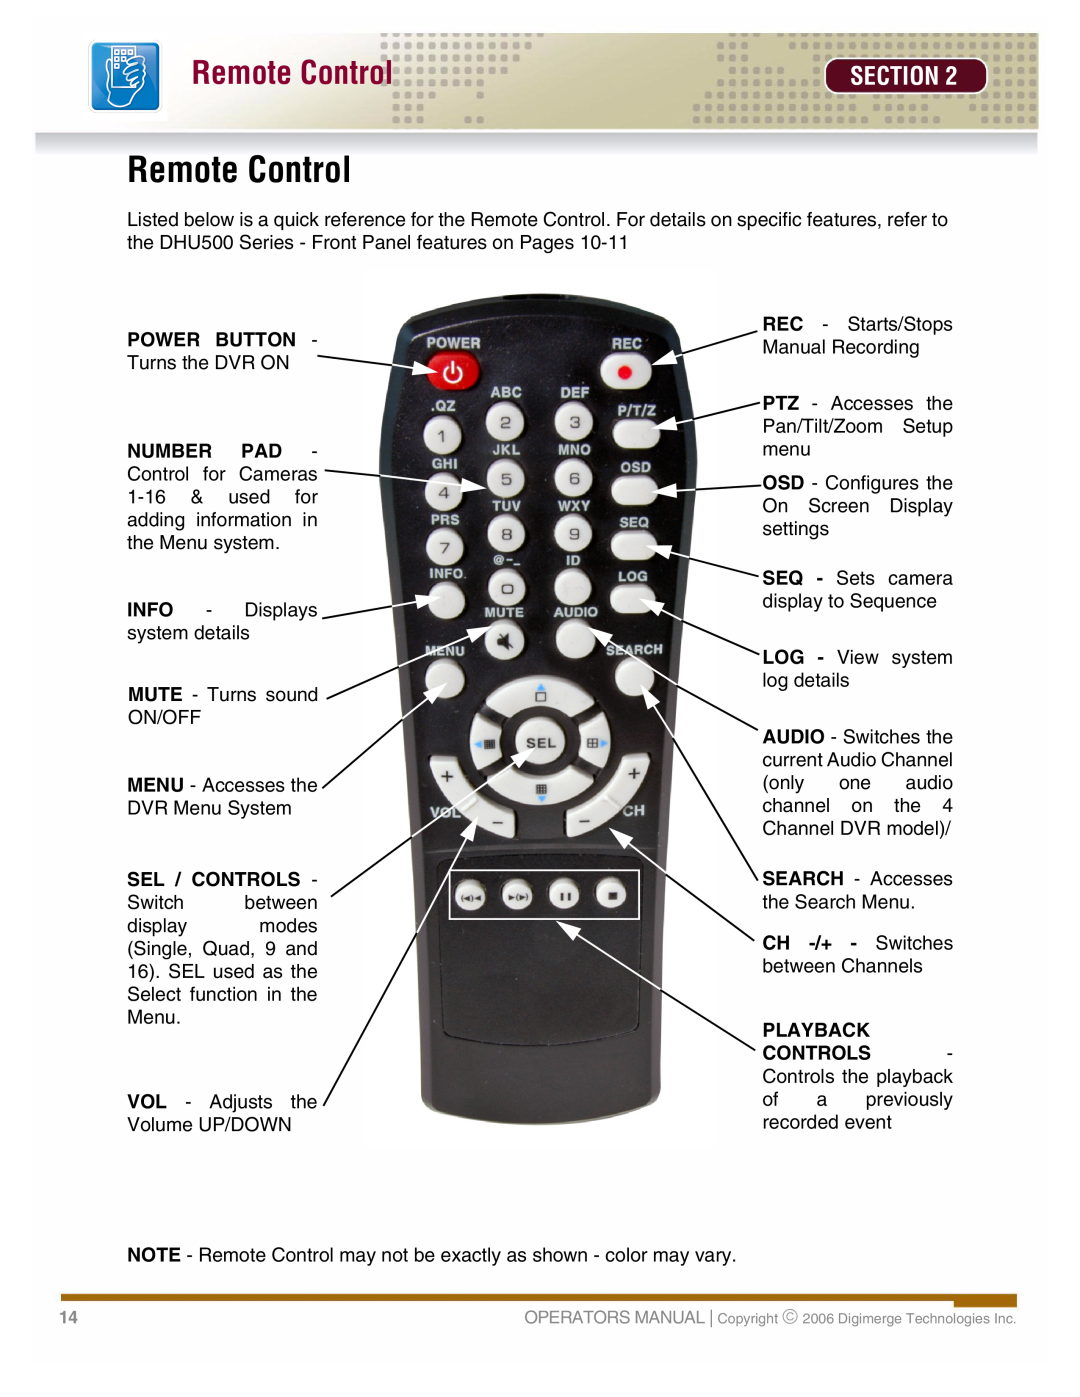 LOREX Technology DHU500 manual Remote Control, Section, Power Button, Sel / Controls, Playback 